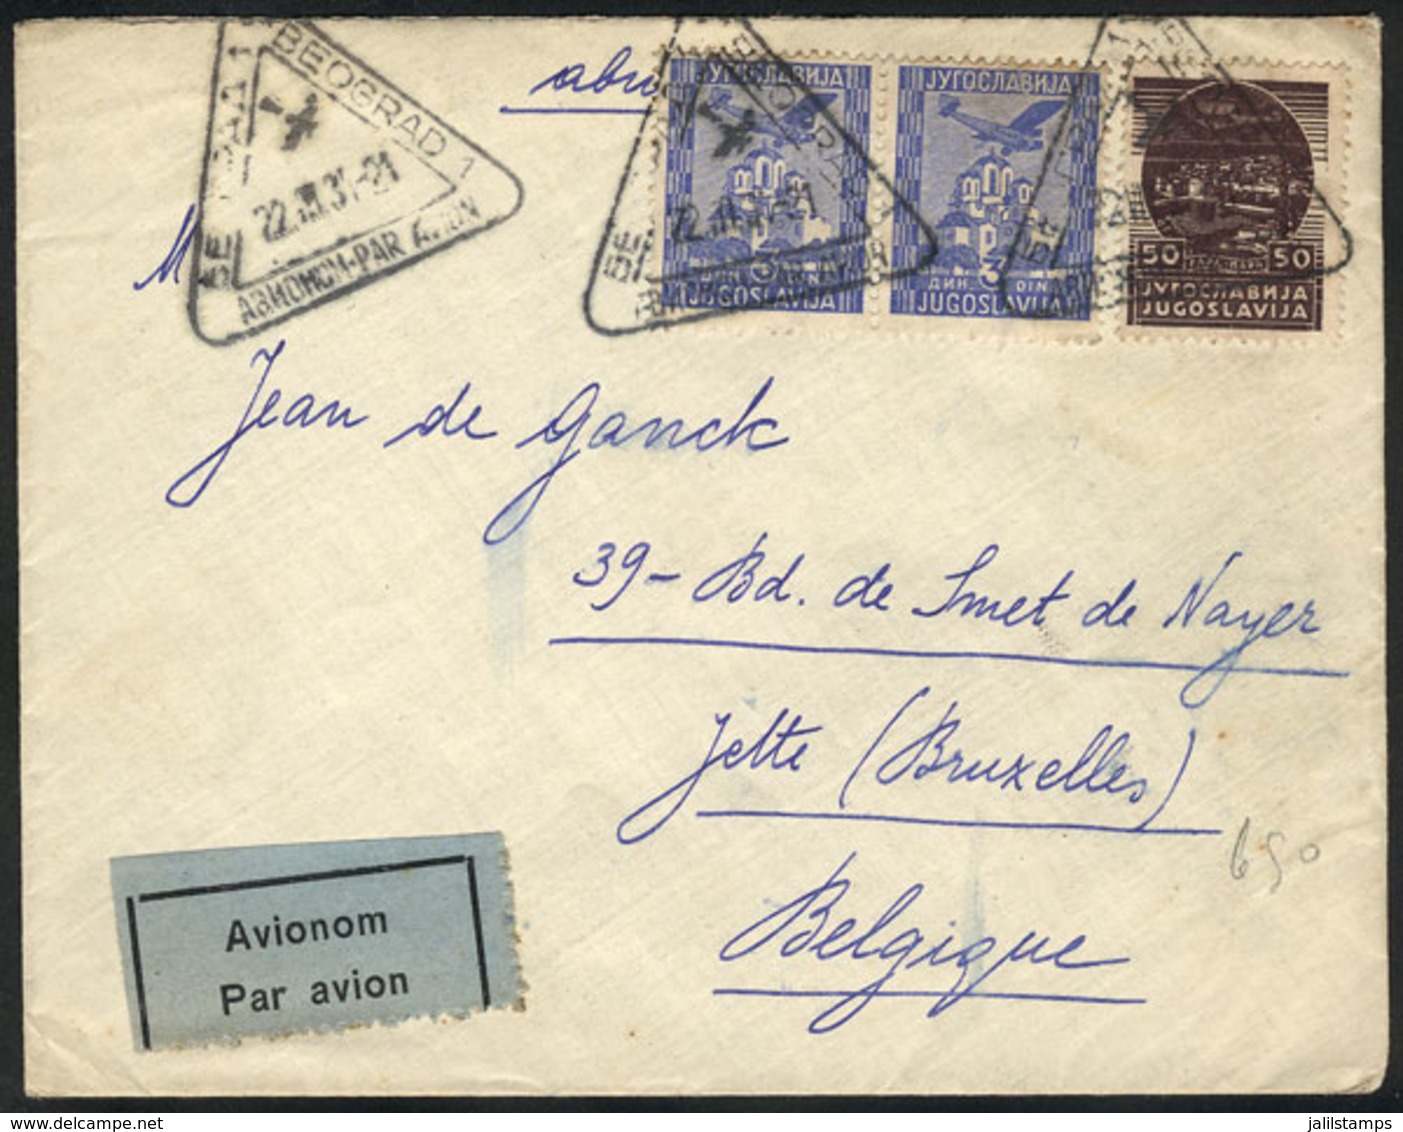 YUGOSLAVIA: 22/AU/1934 BEOGRAD - ZEMUN: Airmail Cover To Belgium, Very Fine Quality! - Storia Postale